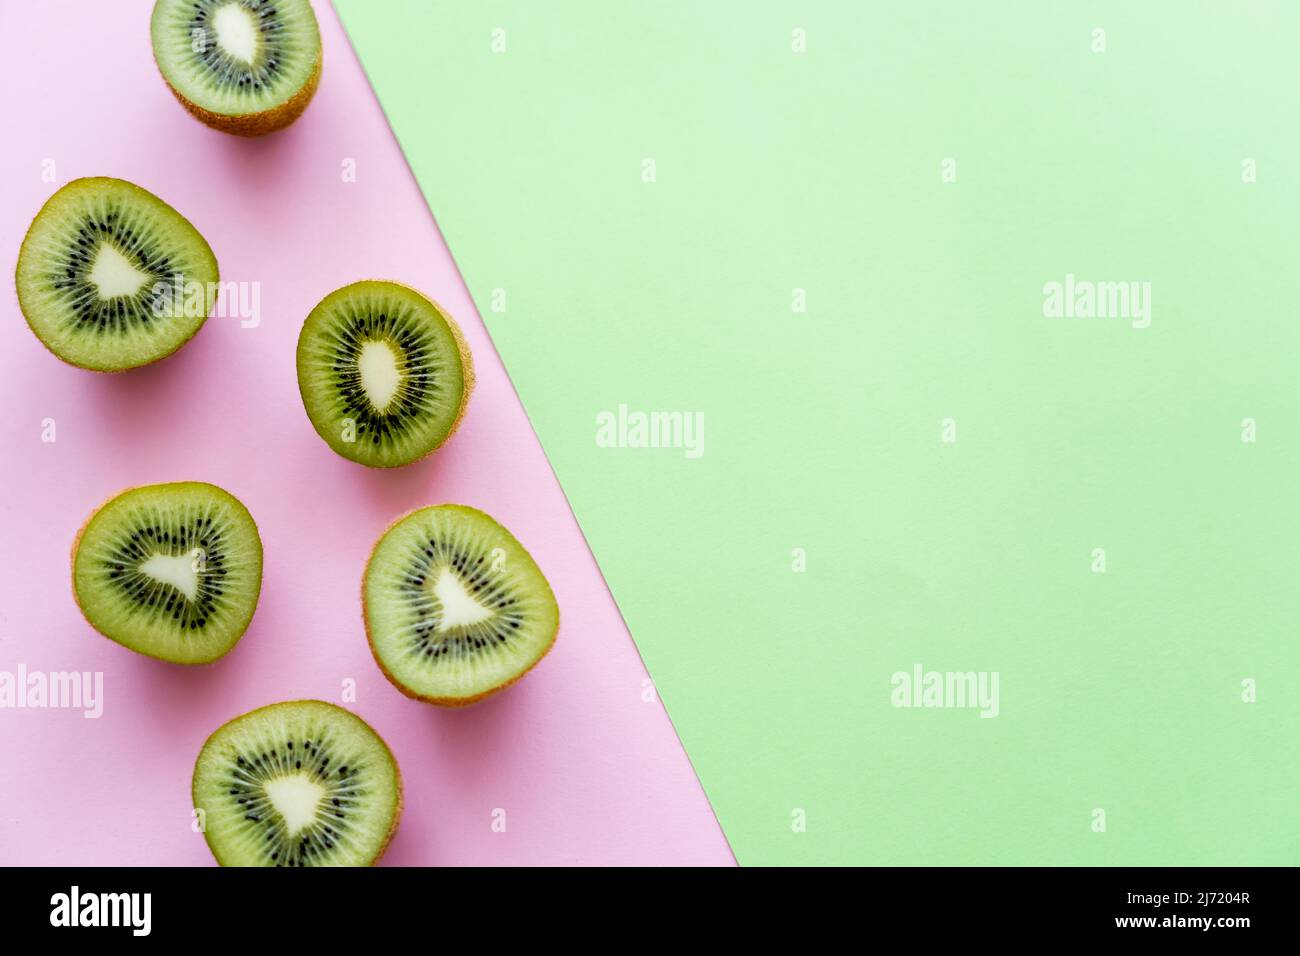 https://c8.alamy.com/comp/2J7204R/top-view-of-fresh-kiwi-fruit-on-green-and-pink-2J7204R.jpg